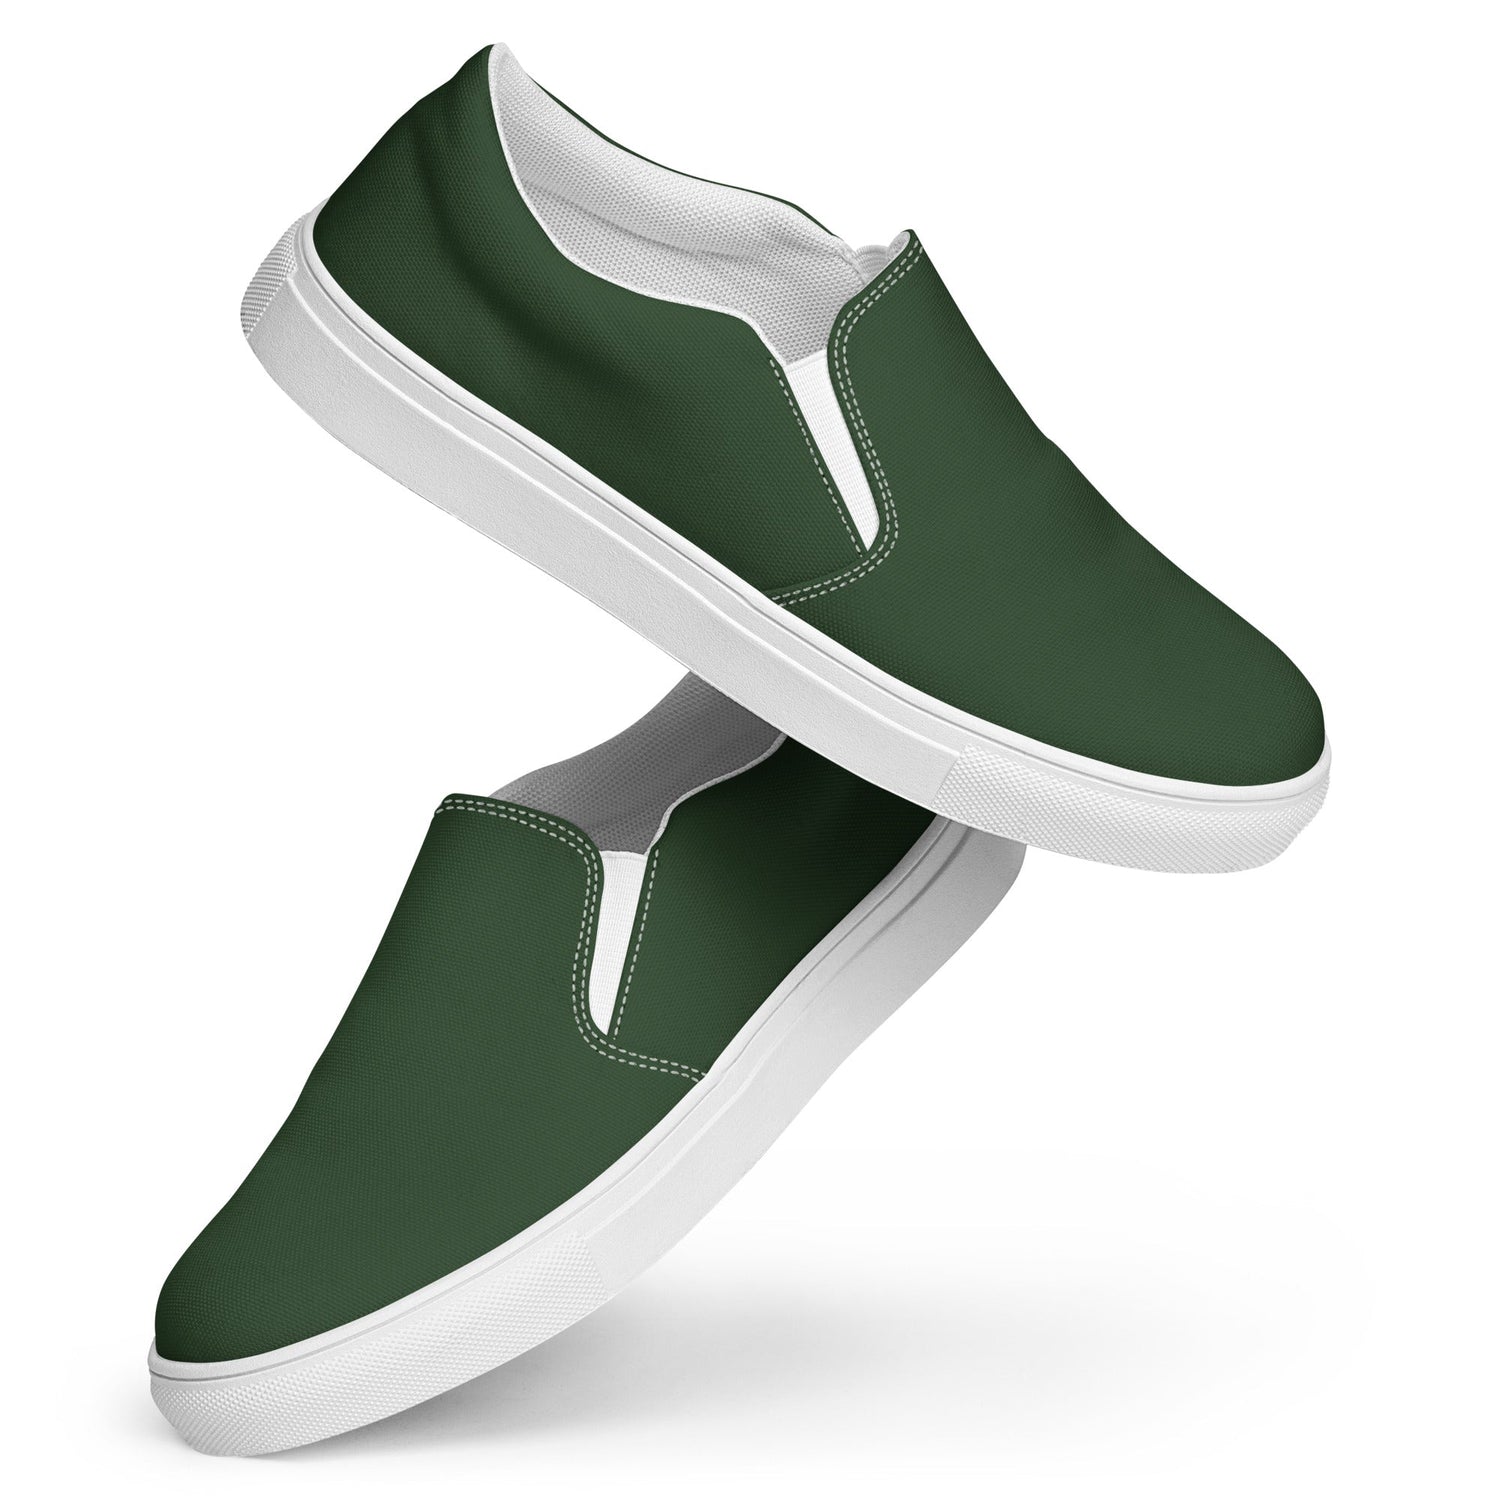 klasneakers Women’s slip-on canvas shoes - Hunter Green